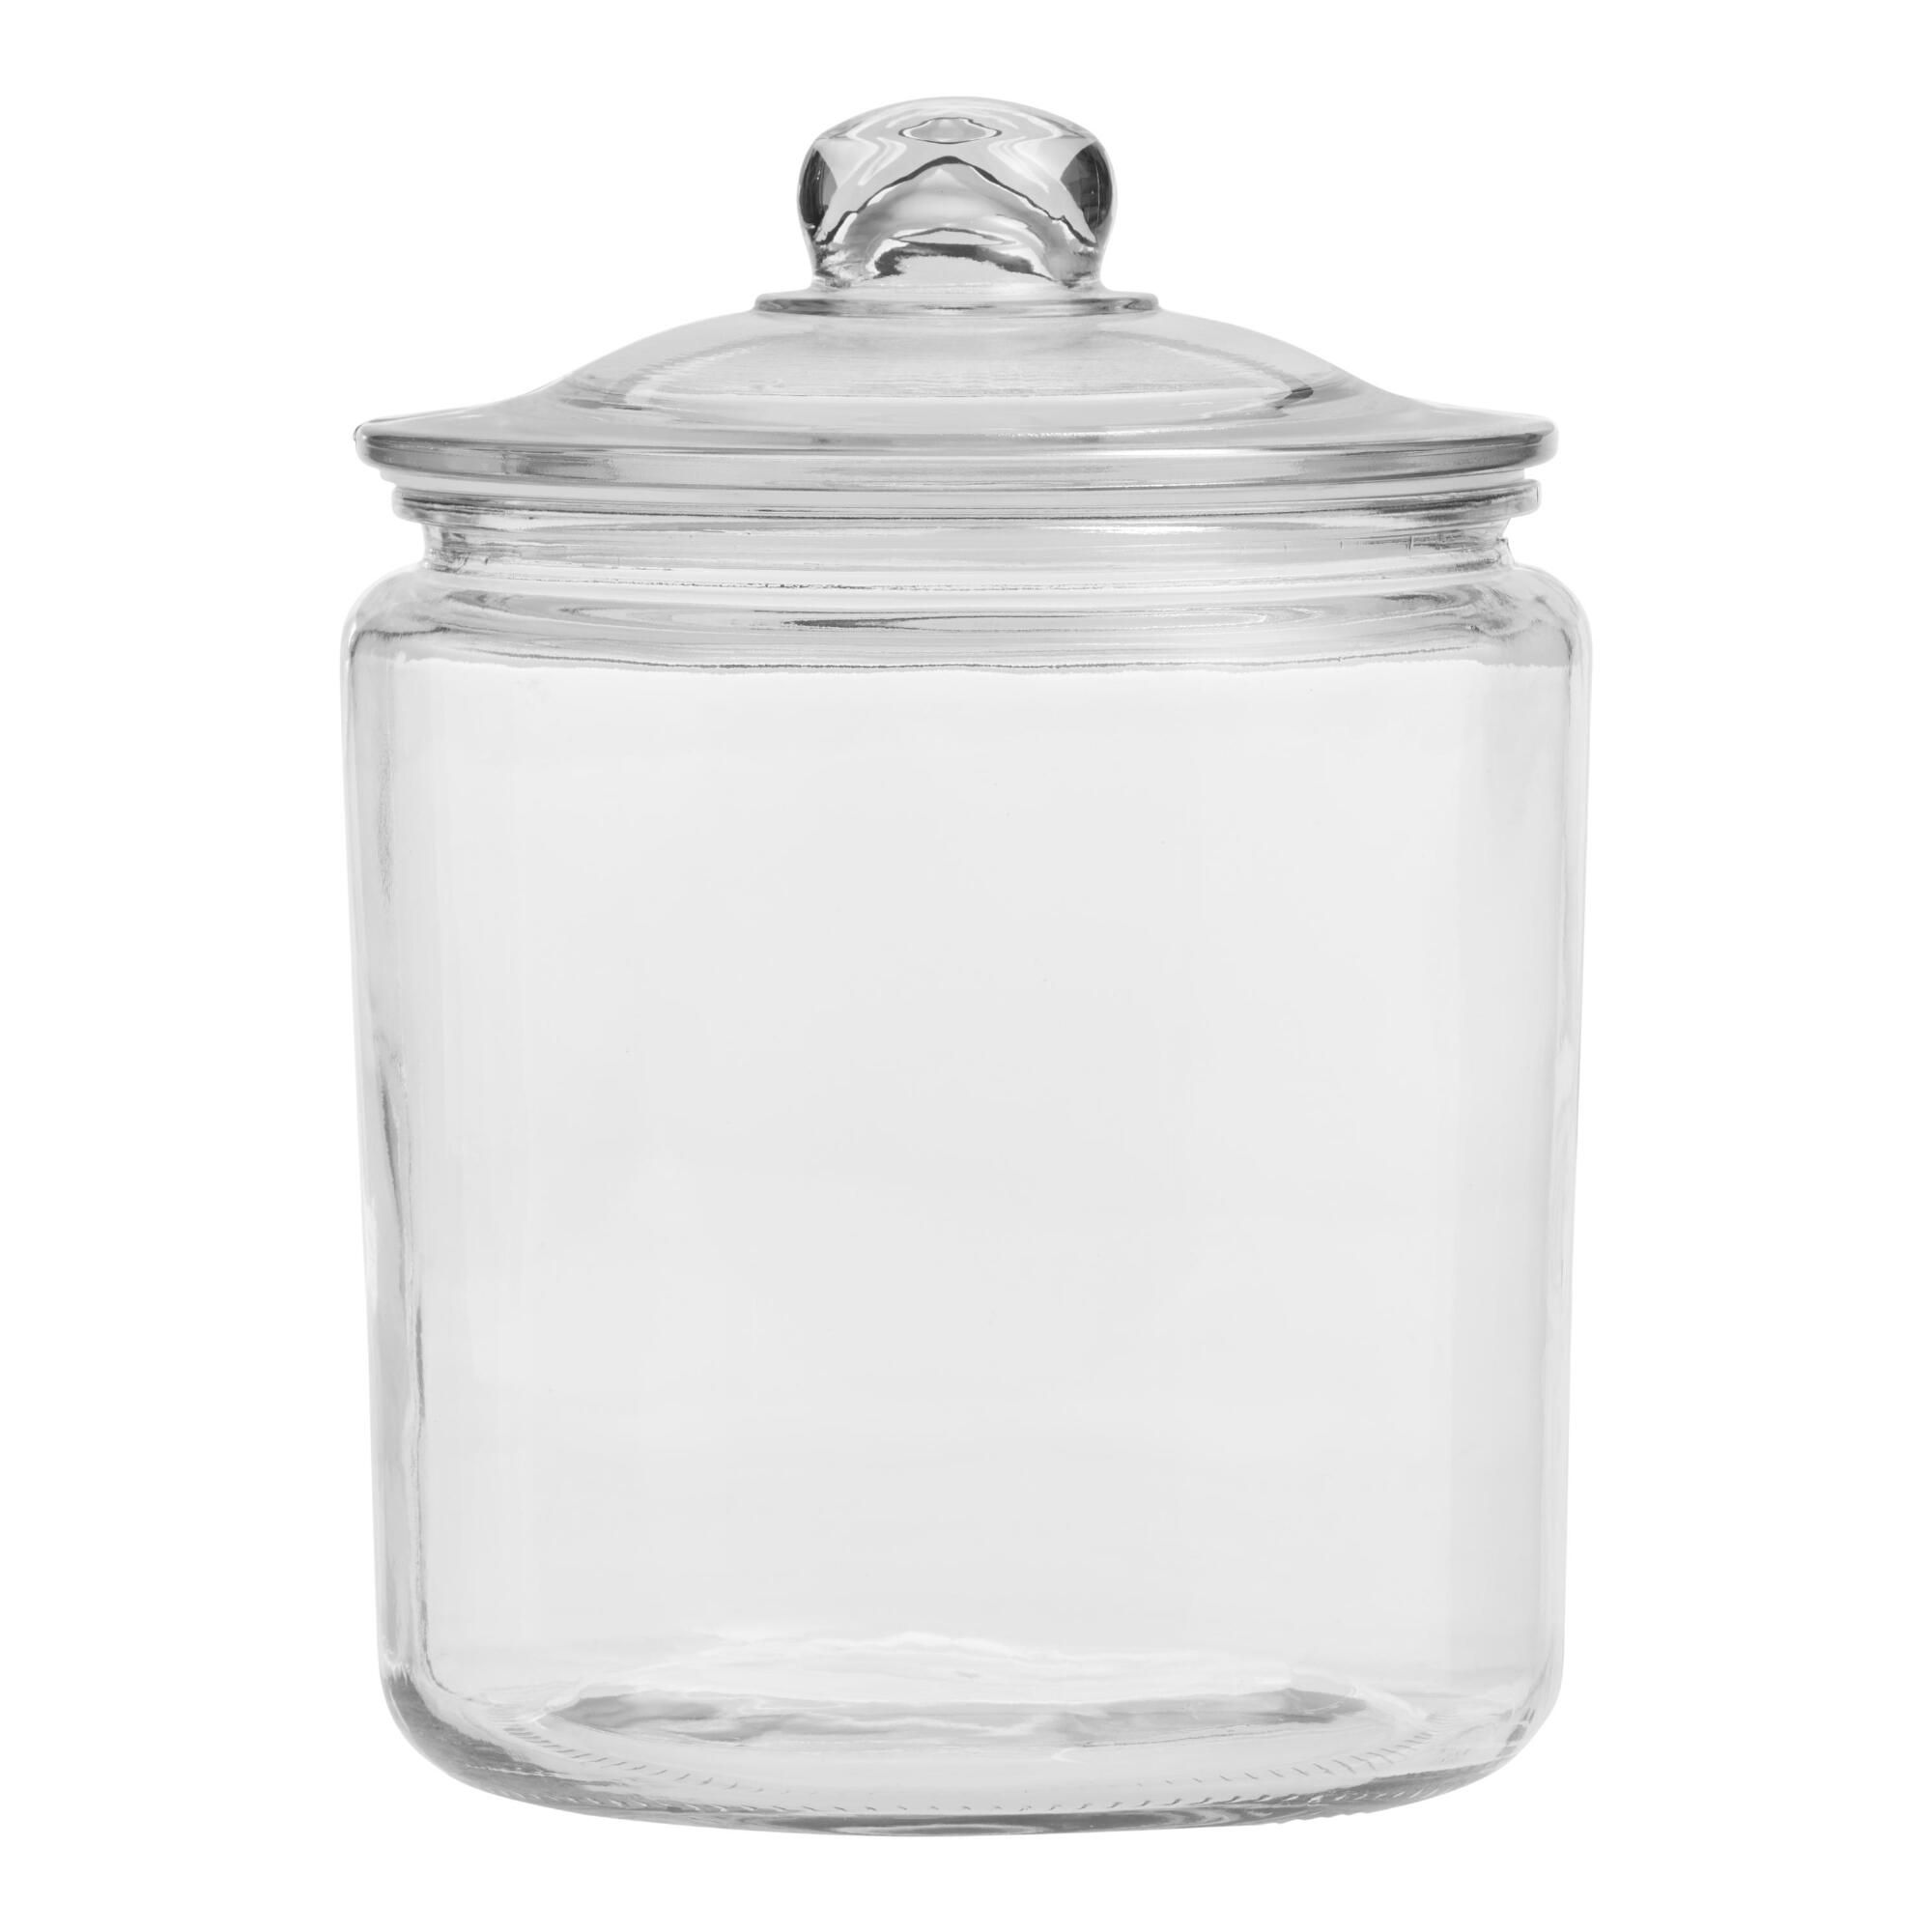 One-Gallon Glass Storage Jar by World Market | World Market